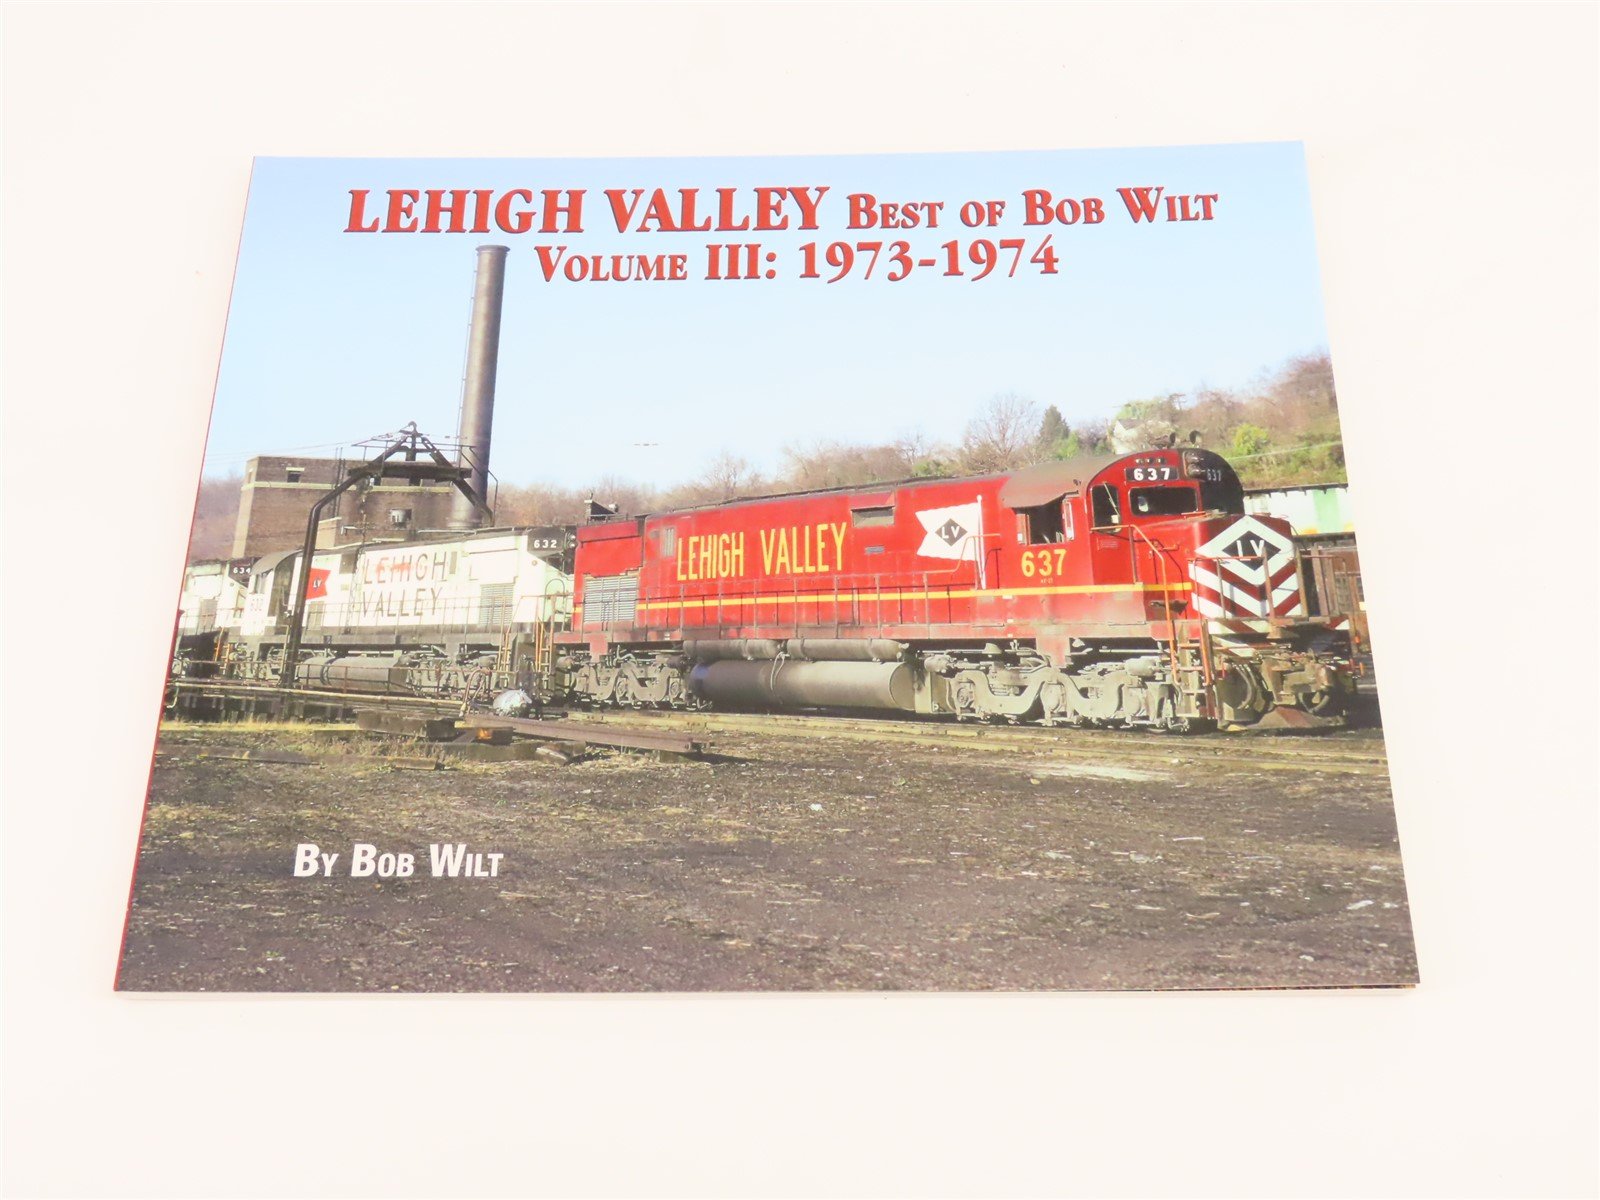 Morning Sun: Lehigh Valley Volume III: 1973-1974 by Bob Wilt ©2018 SC Book